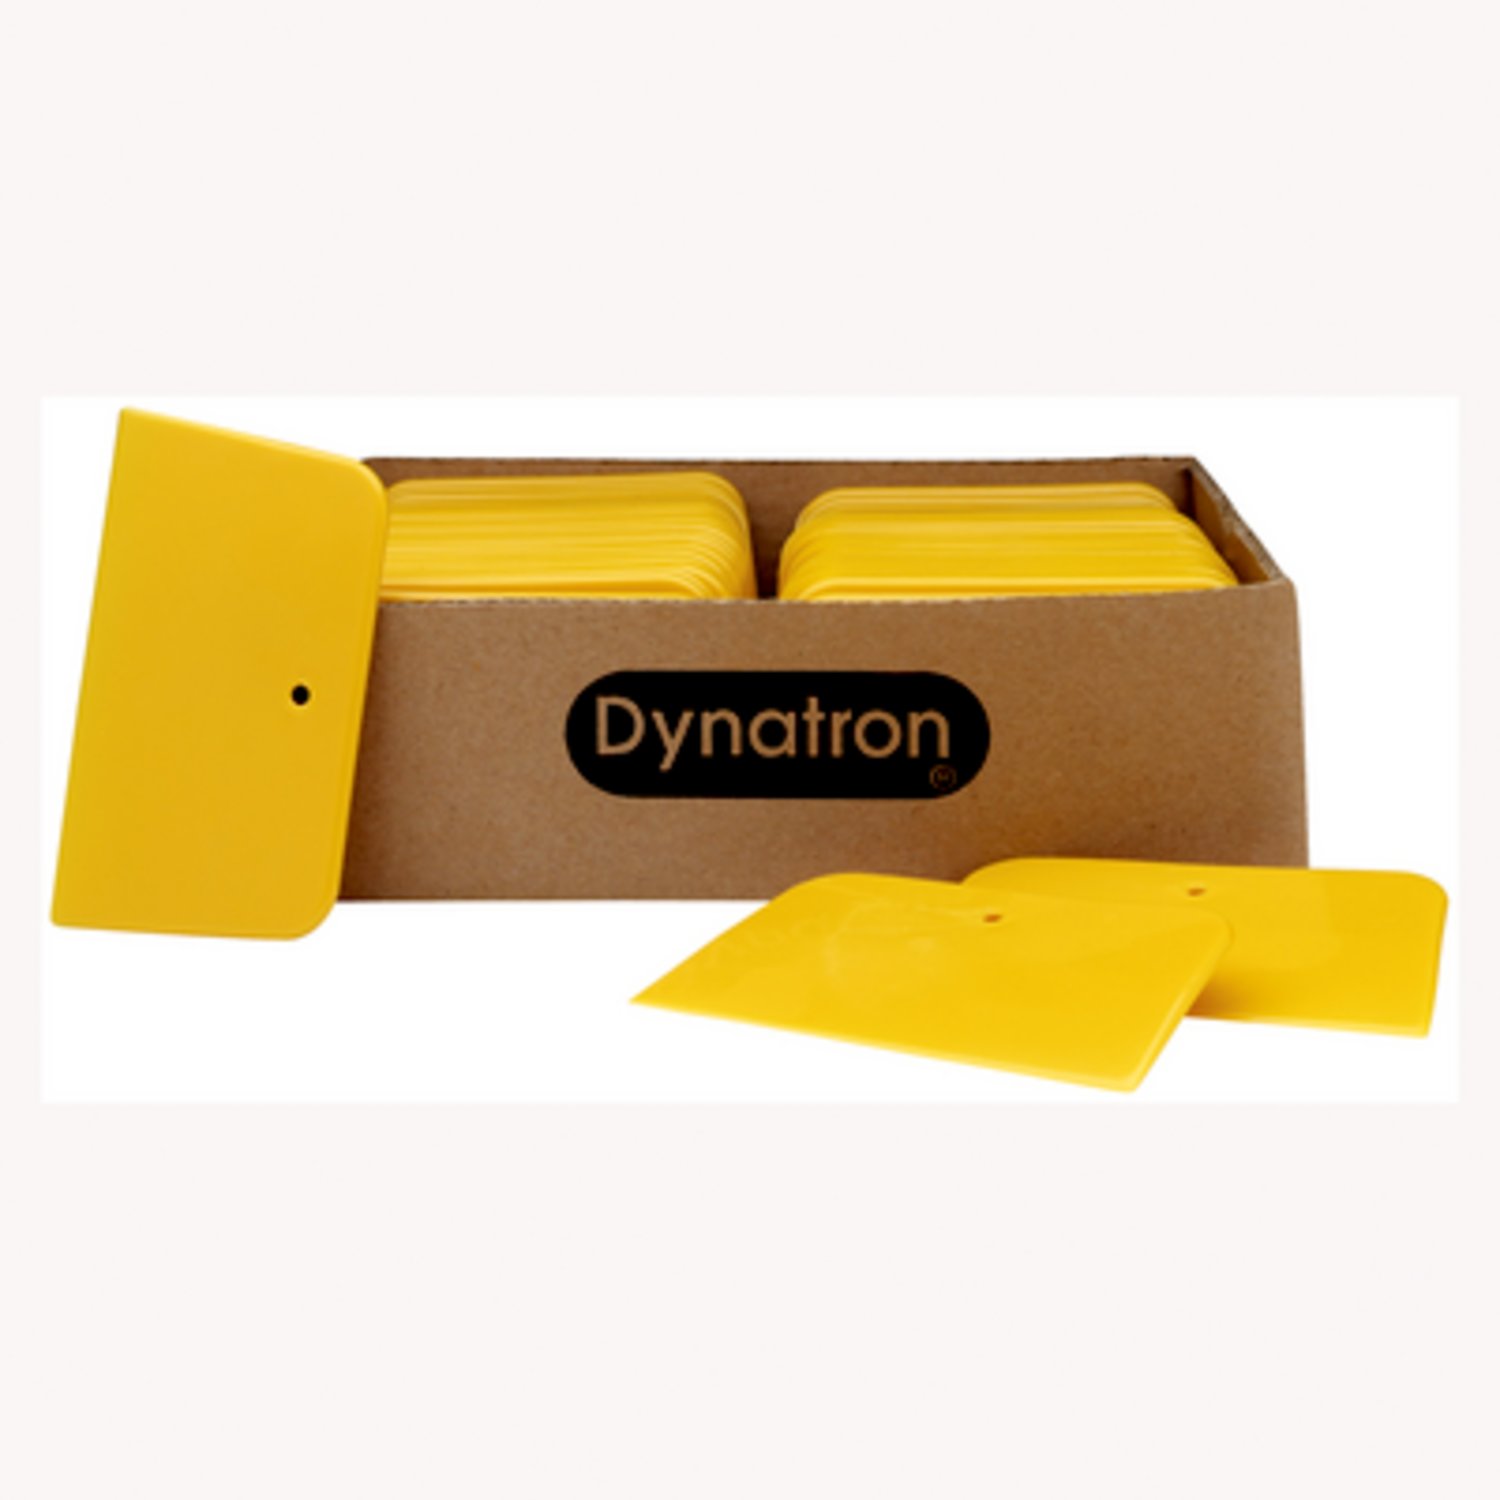 7000049851 - Dynatron Yellow Spreader, 344, 3 x 4, 144 per case